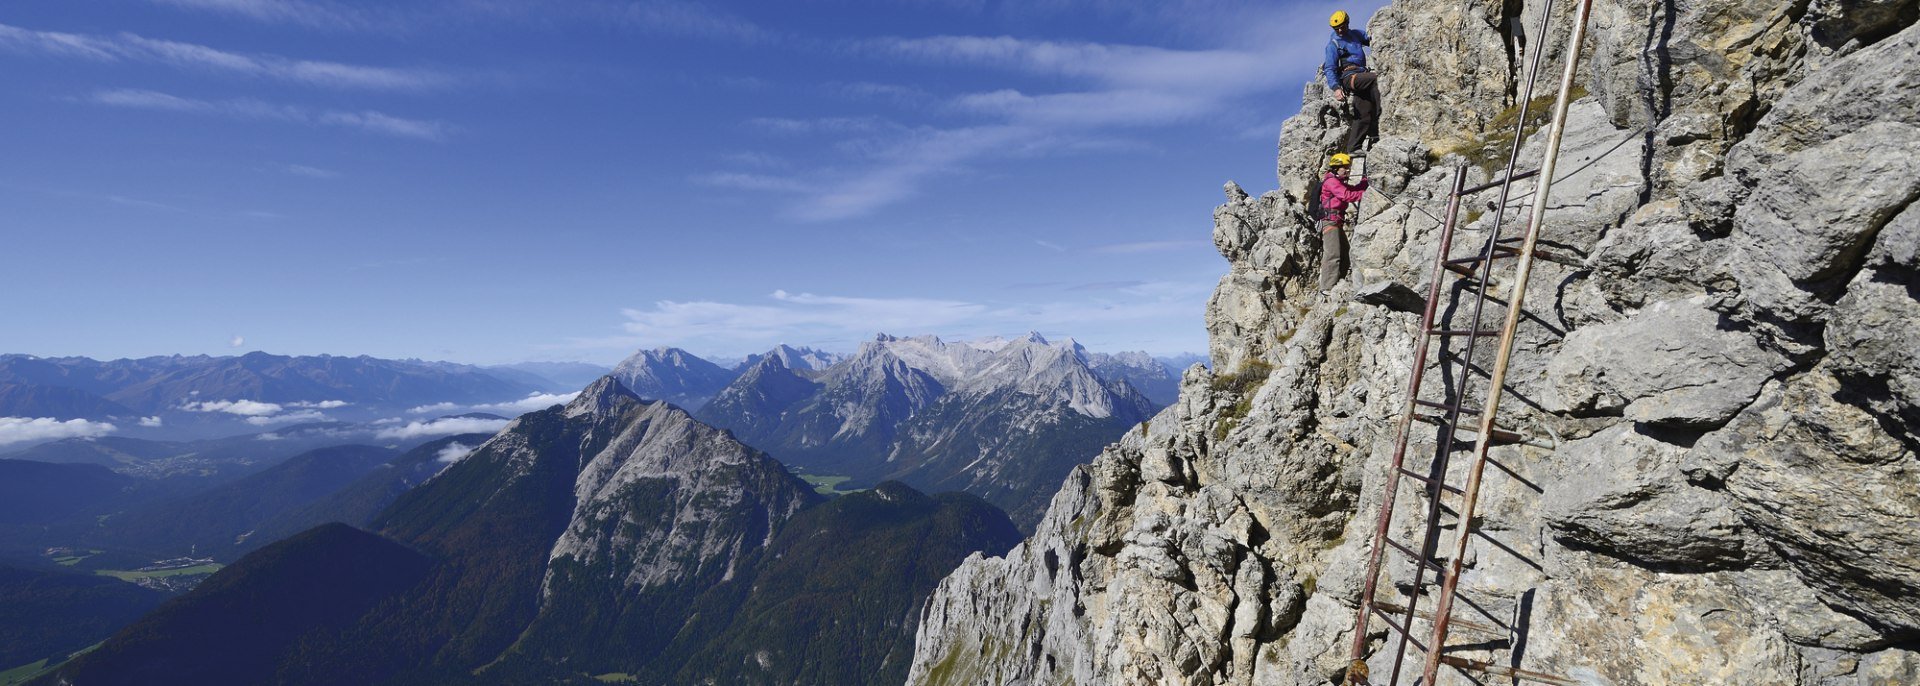 Luftige Erlebnisse auf dem Klettersteig am Karwendel, © Alpenwelt Karwendel | Wolfgang Ehn